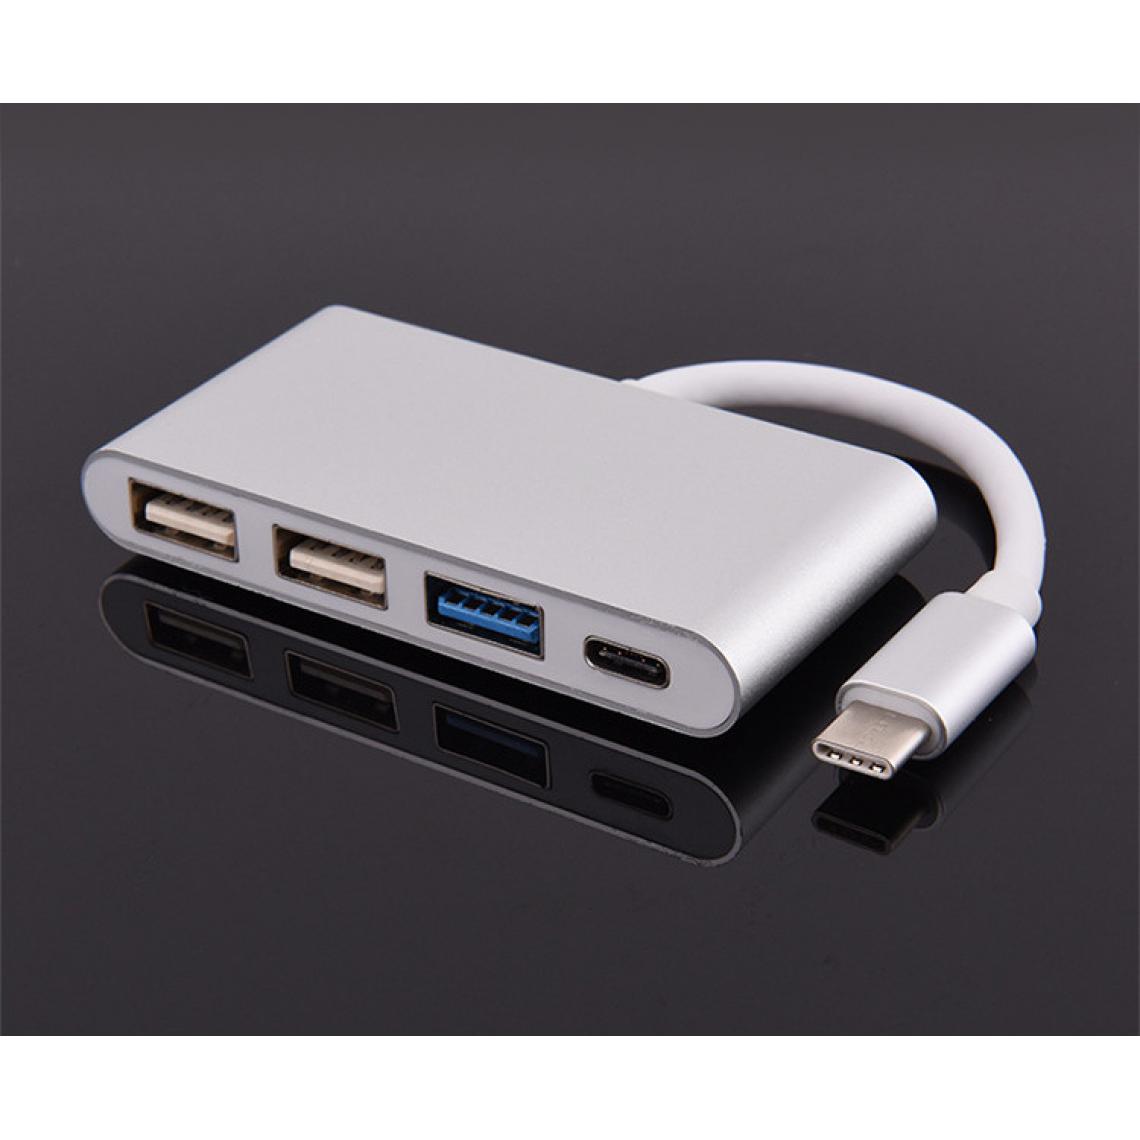 Shot - Multi Adaptateur 4 en 1 Type C pour XIAOMI Mi Pad 4 Smartphone Hub 2 ports USB 2.0 1 Port USB 3.0 (ARGENT) - Hub